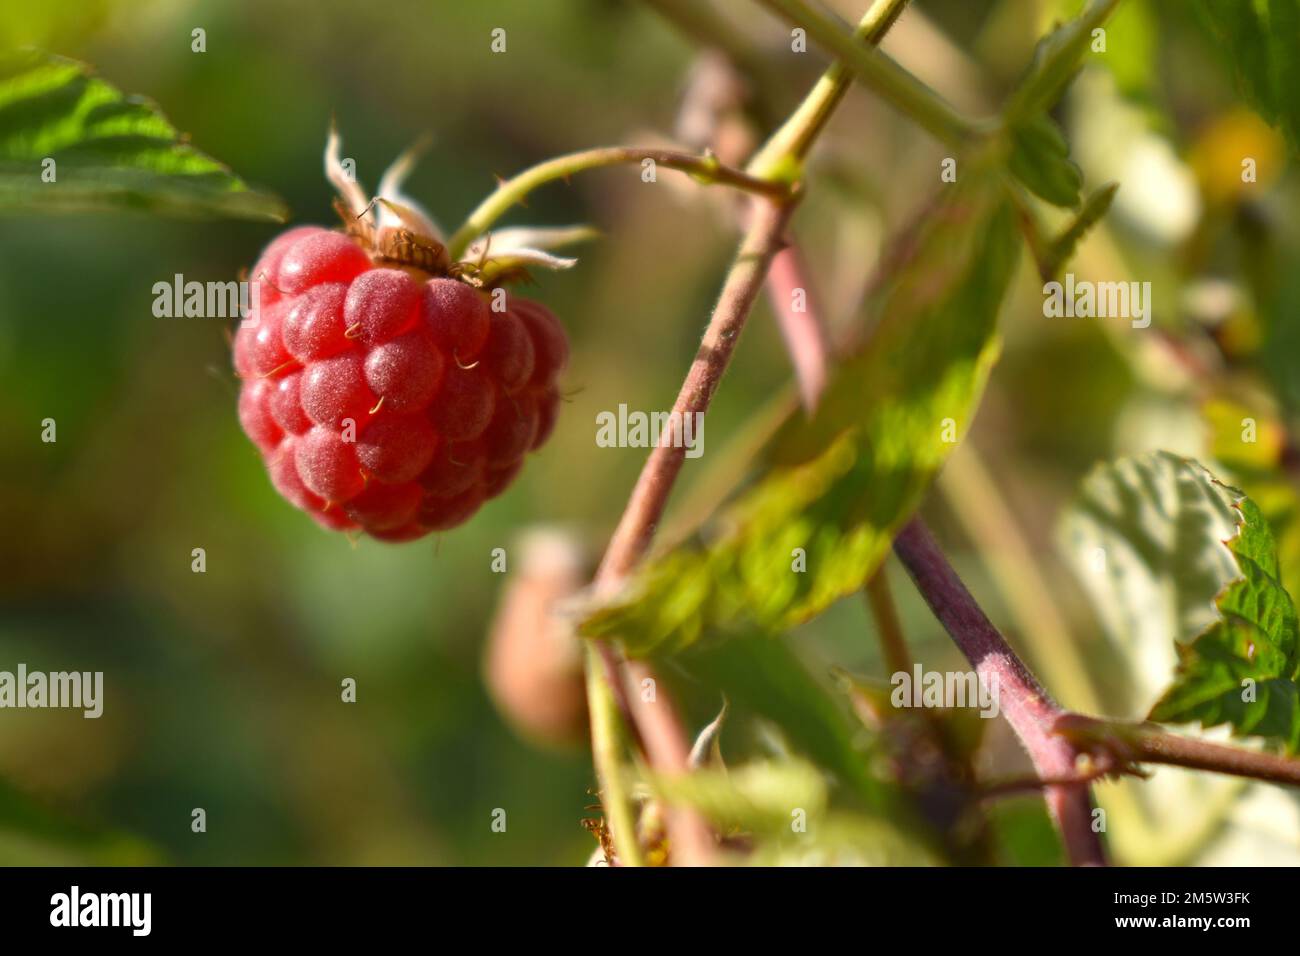 https://c8.alamy.com/comp/2M5W3FK/ripe-wild-raspberry-on-branches-green-background-2M5W3FK.jpg